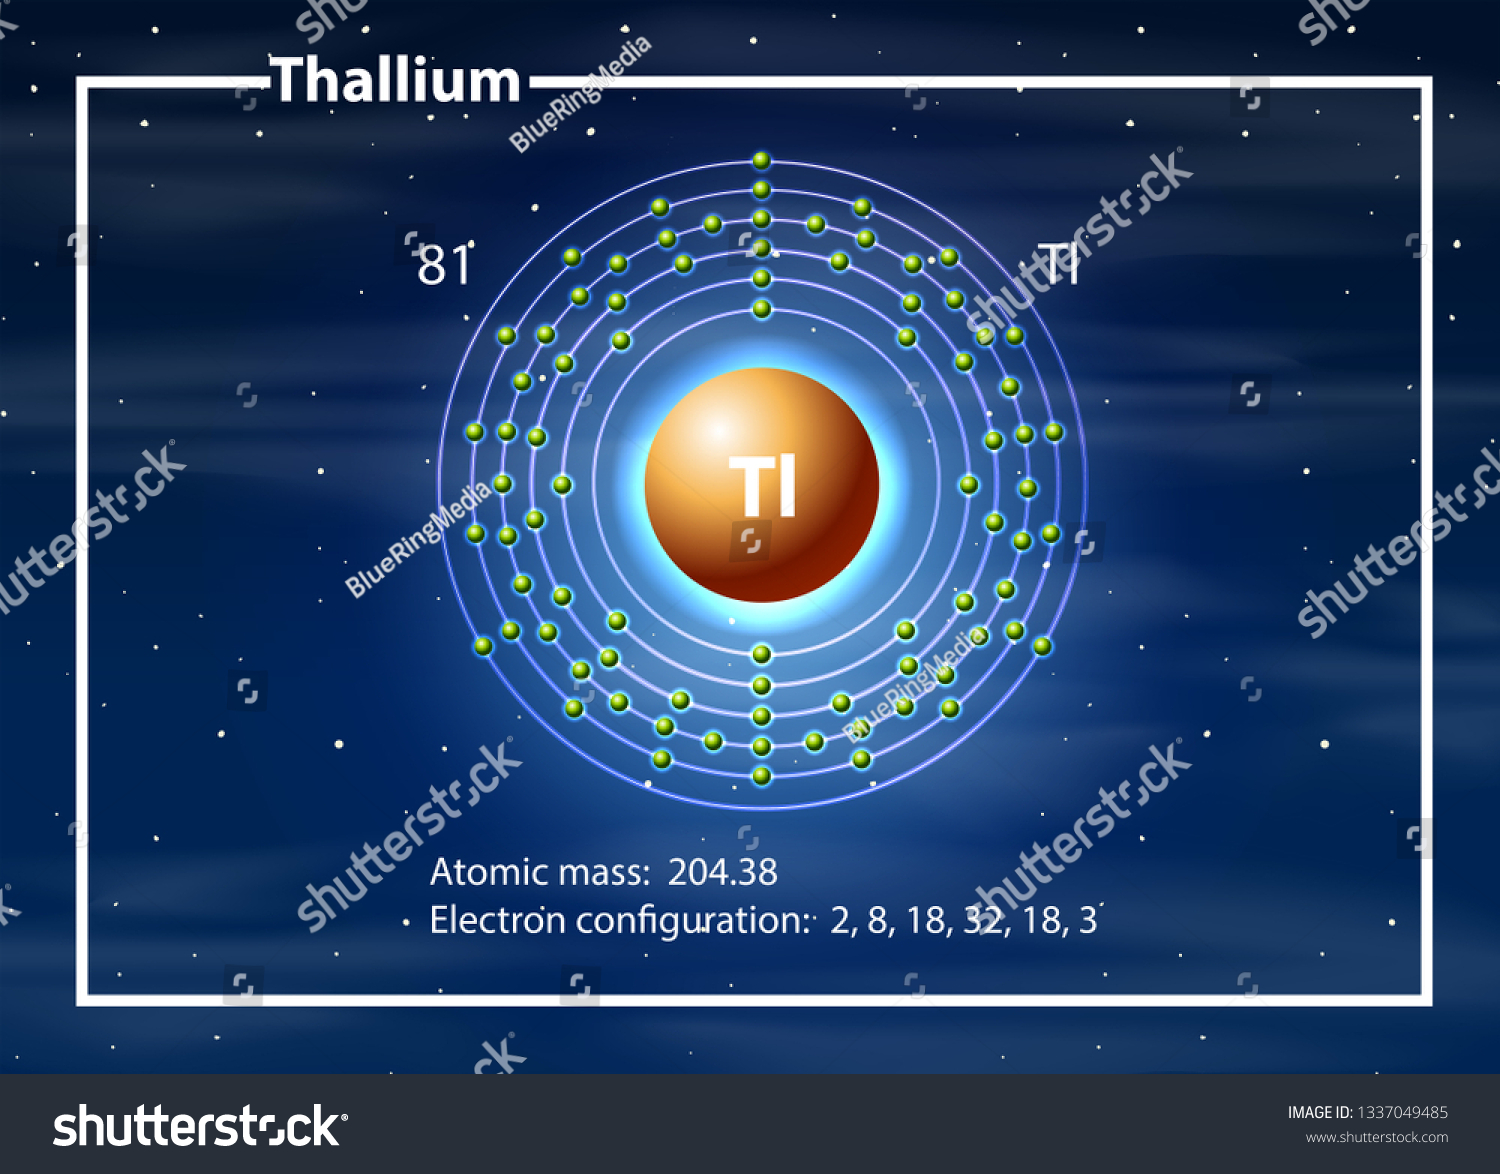 Thallium Atom Diagram Illustration Stock Vector (Royalty Free ...